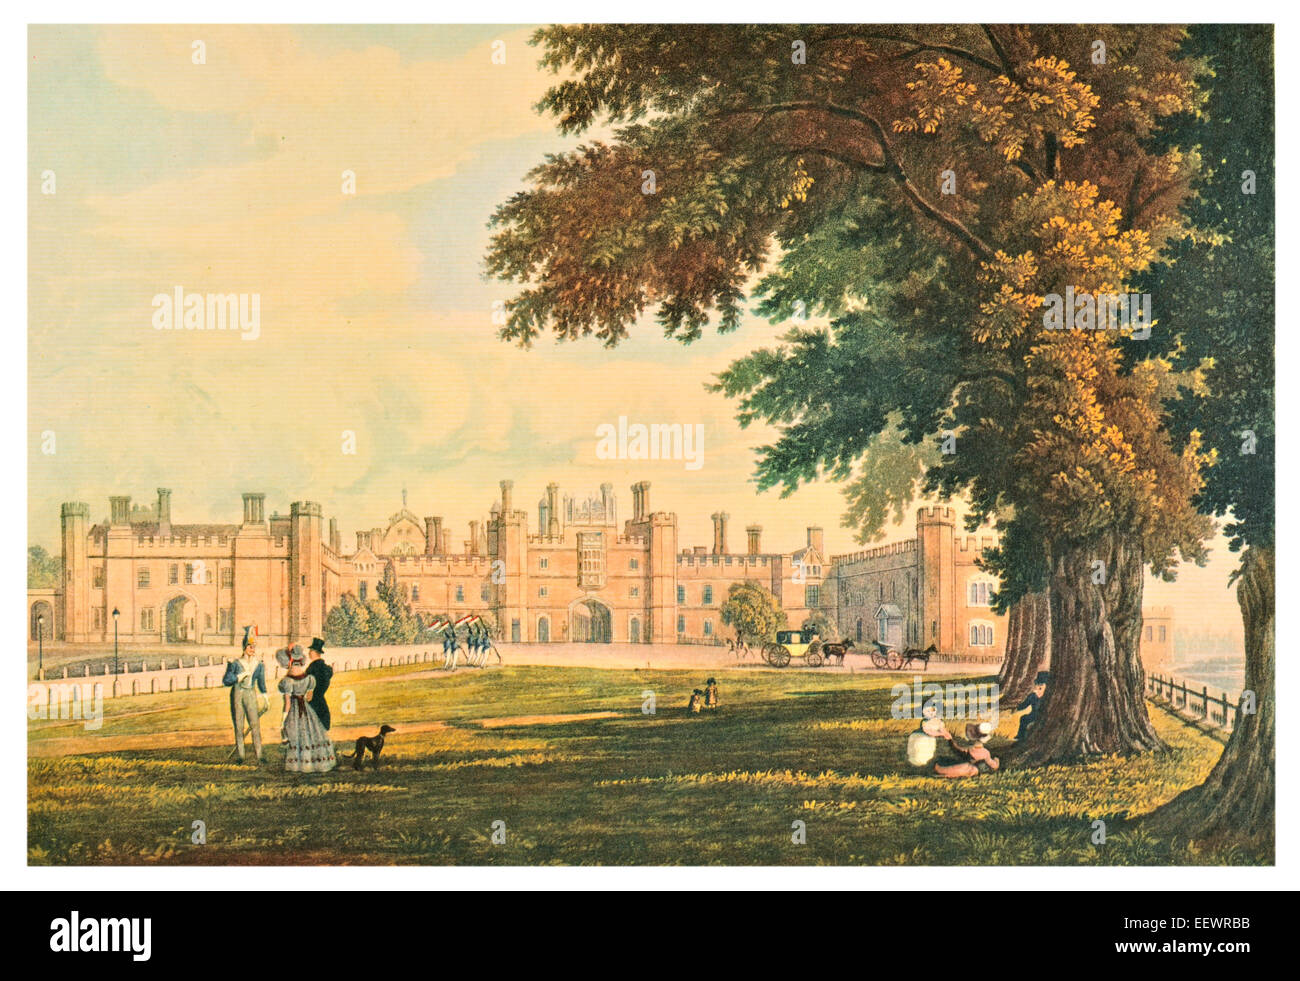 Hampton Court Palace 1827 London Borough of Richmond upon Thames Greater London georgiano de la Familia Real Británica Foto de stock